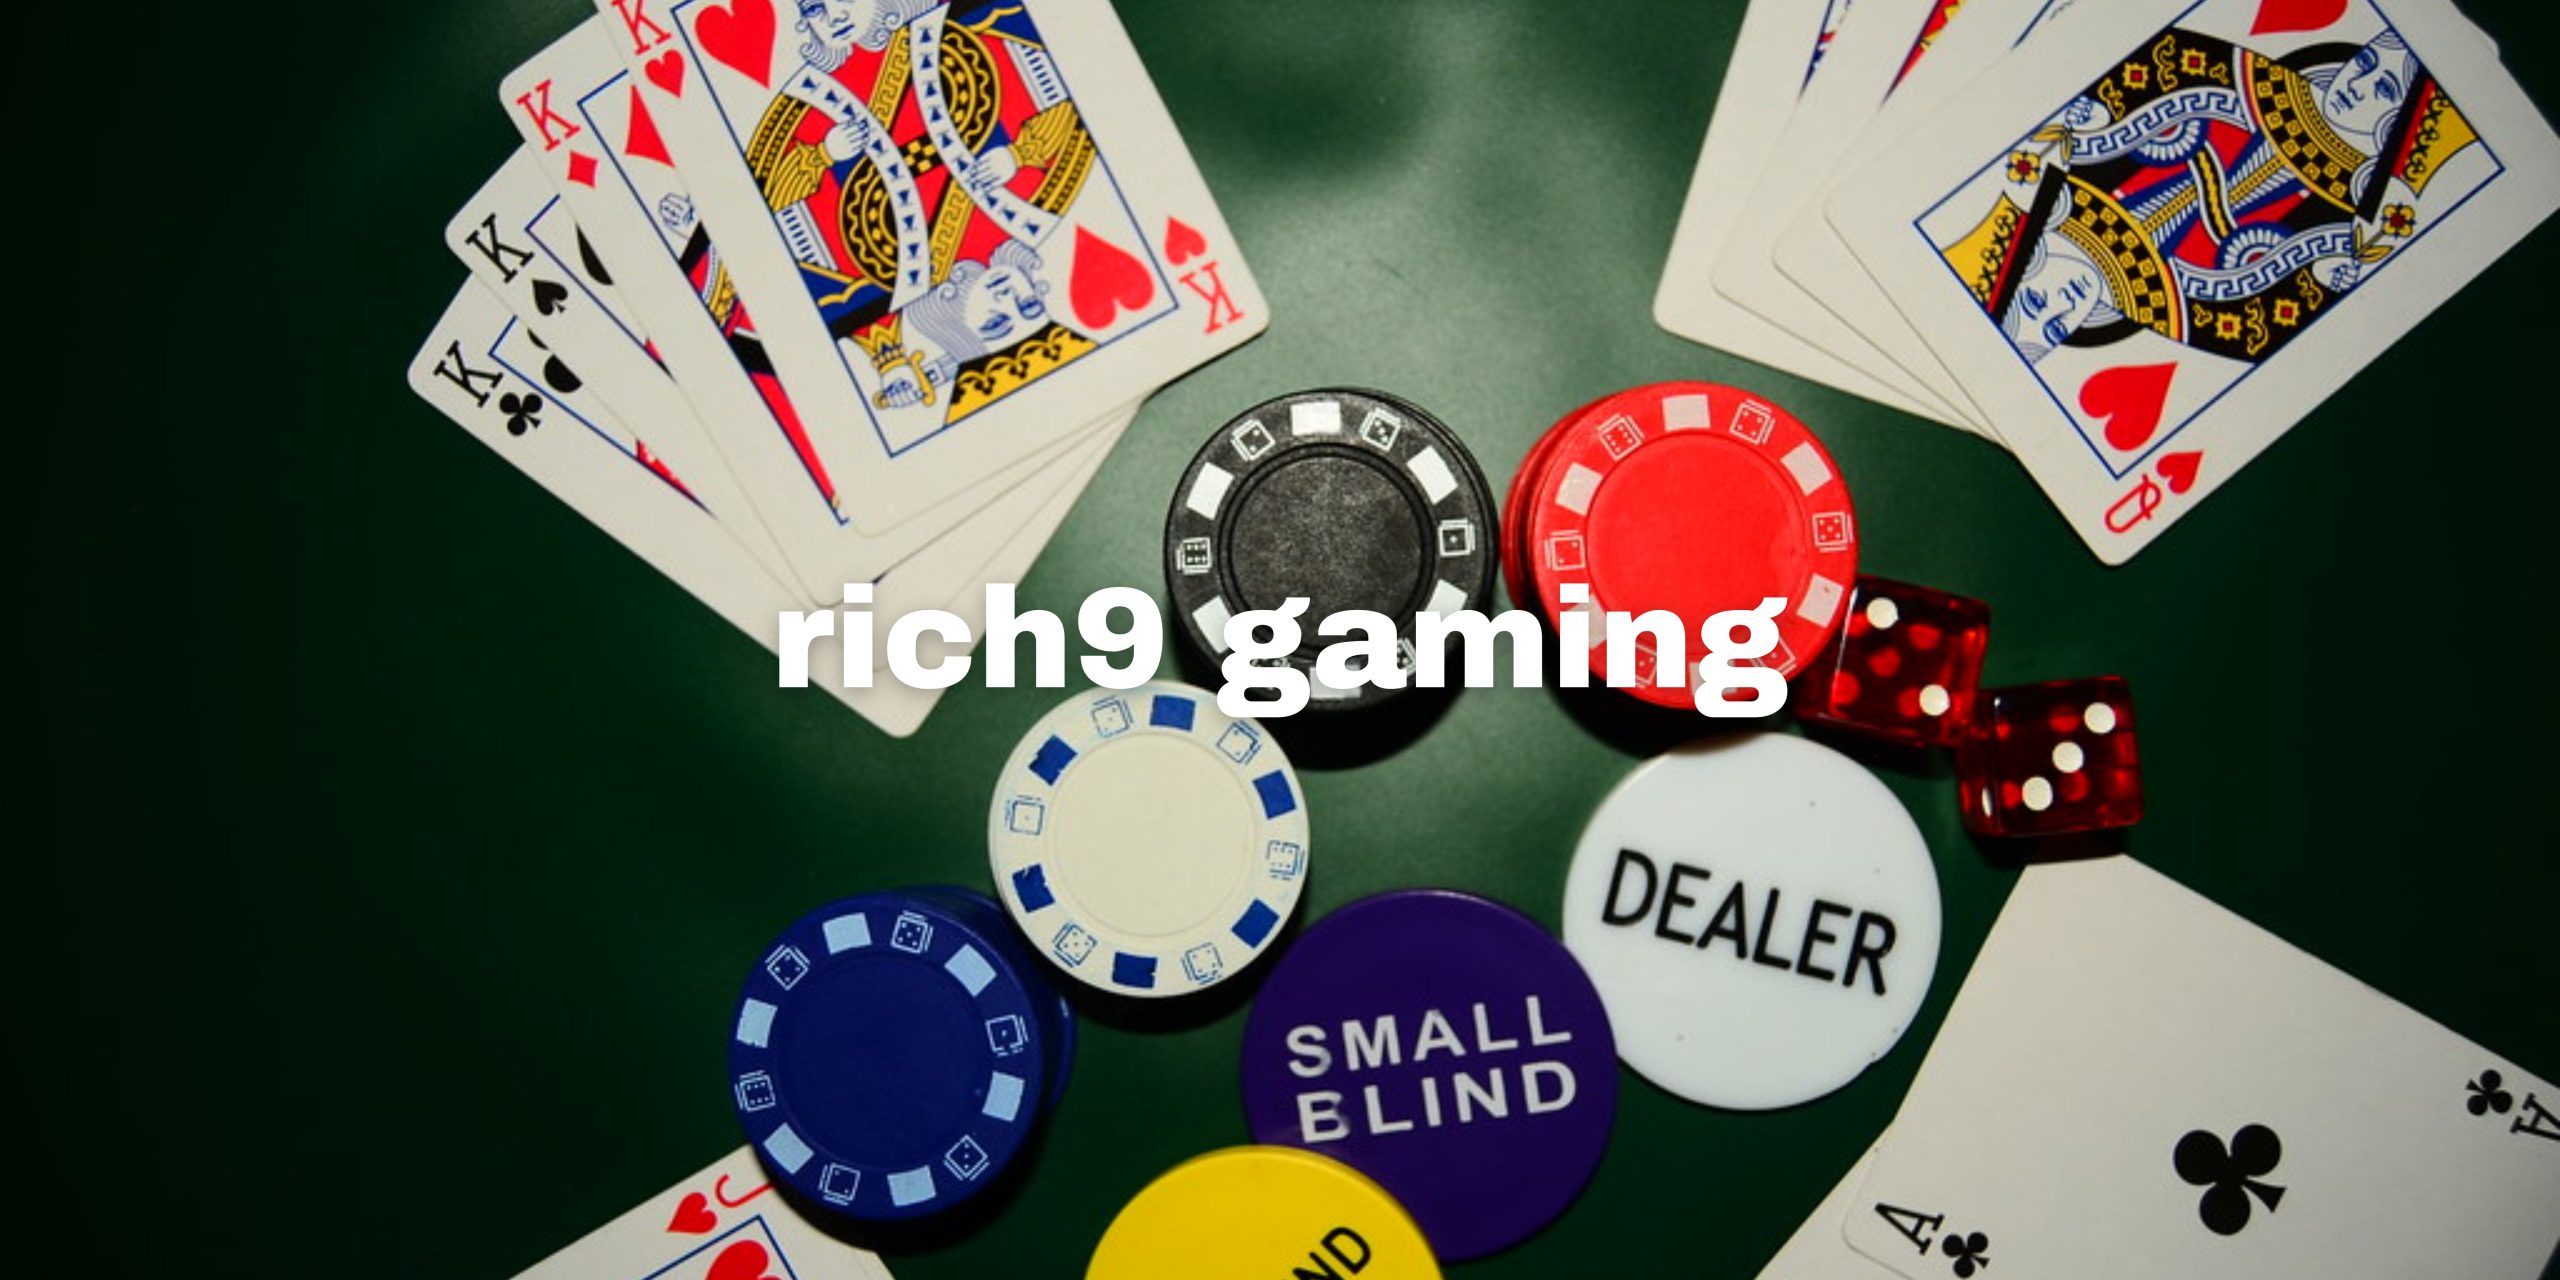 rich9 gaming